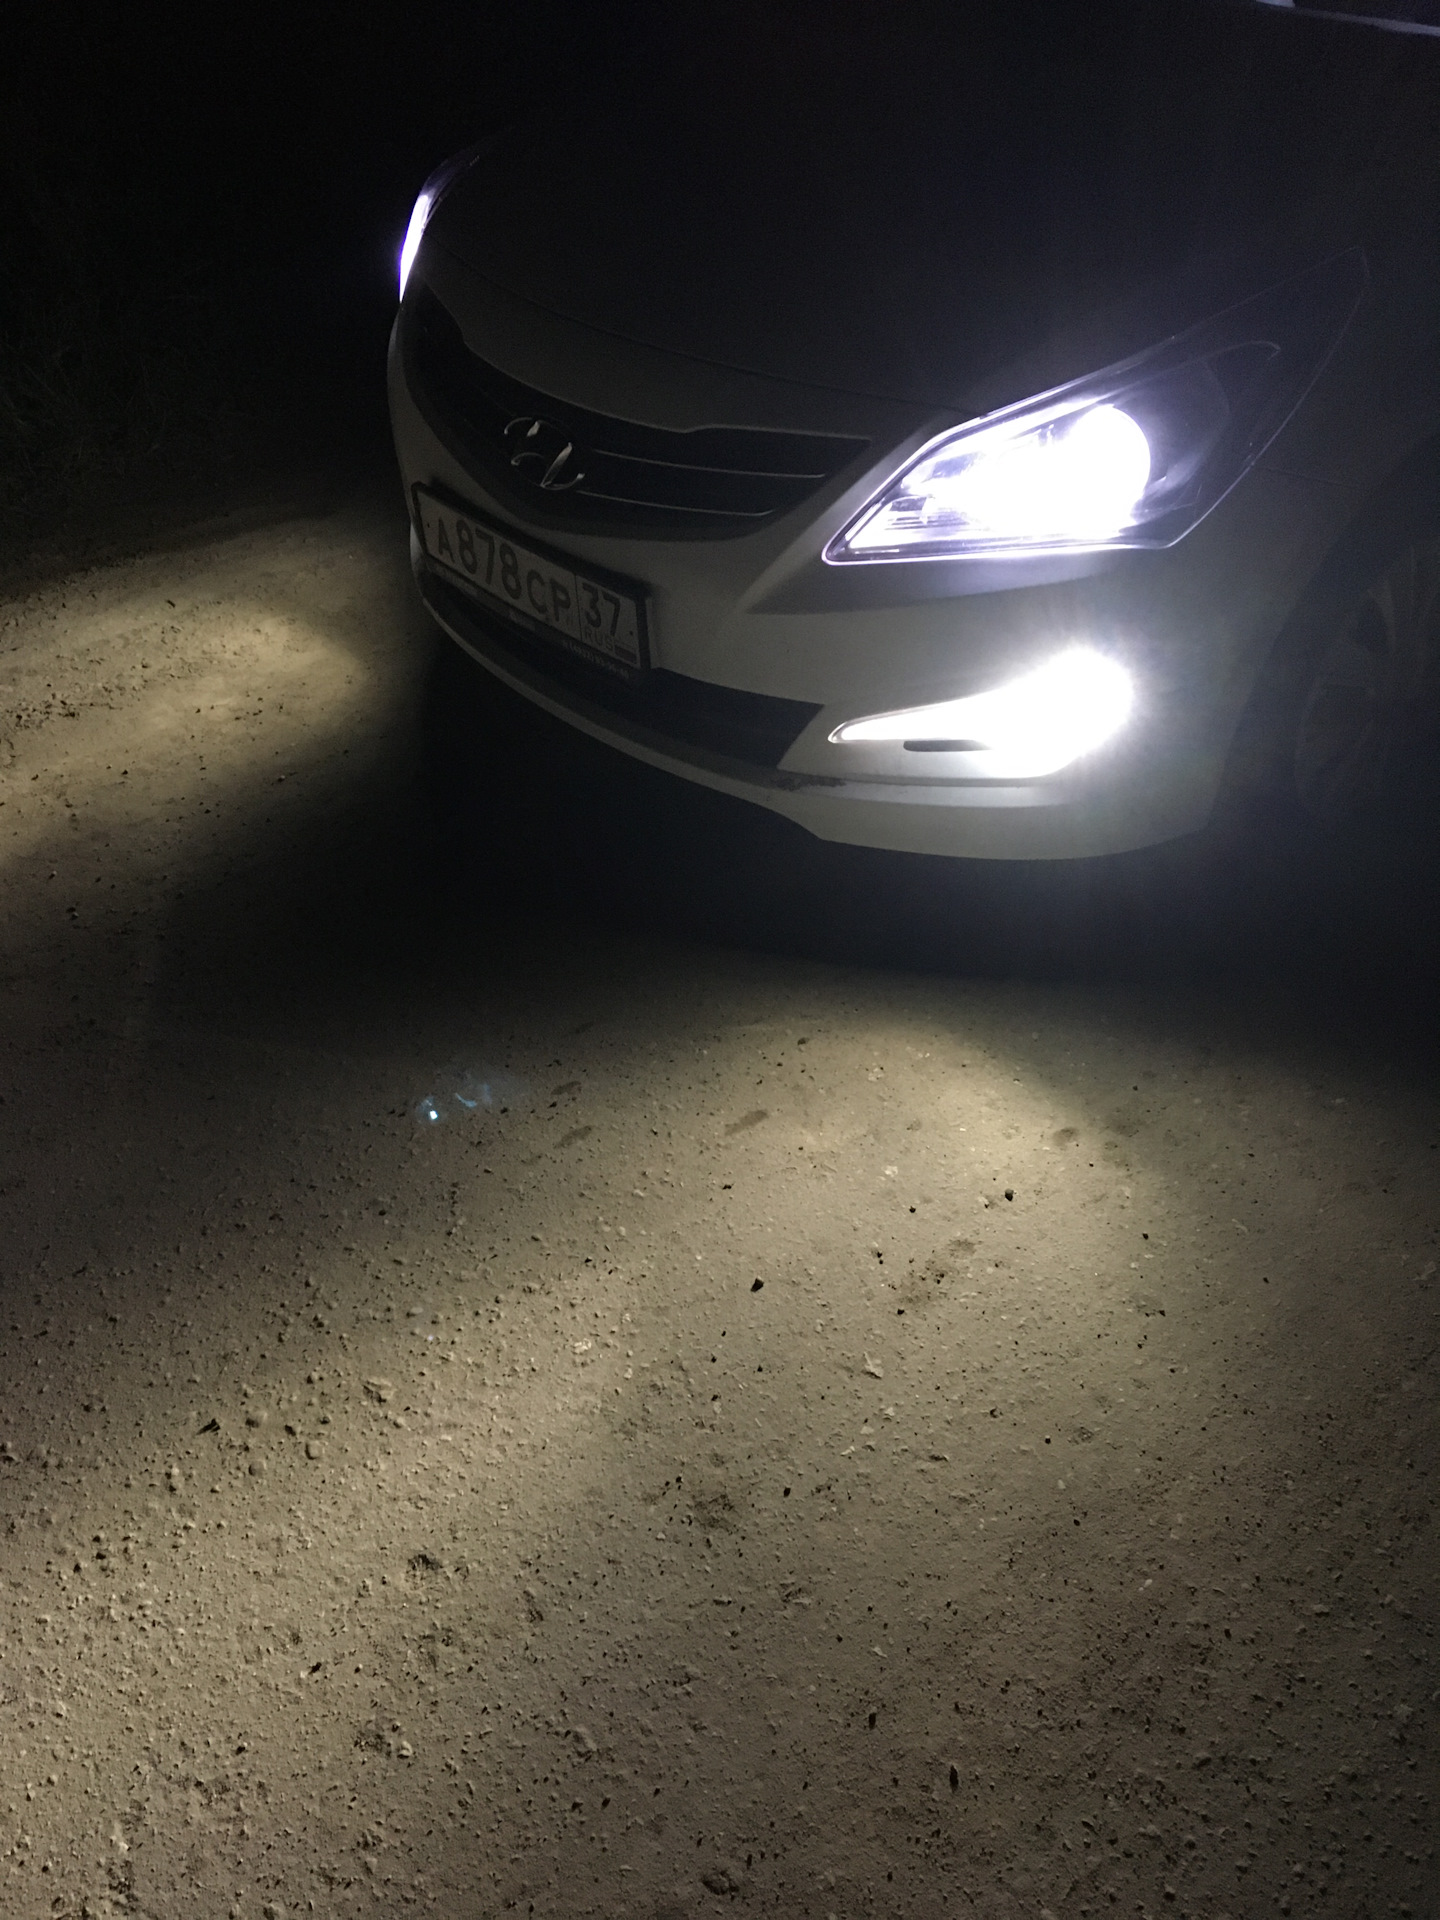 Солярис 2015 год лампы. ПТФ led Hyundai Solaris. Hyundai Solaris 2015 лампы в туманки. Лед ПТФ Solaris 1. Led лампы в Солярис 1.